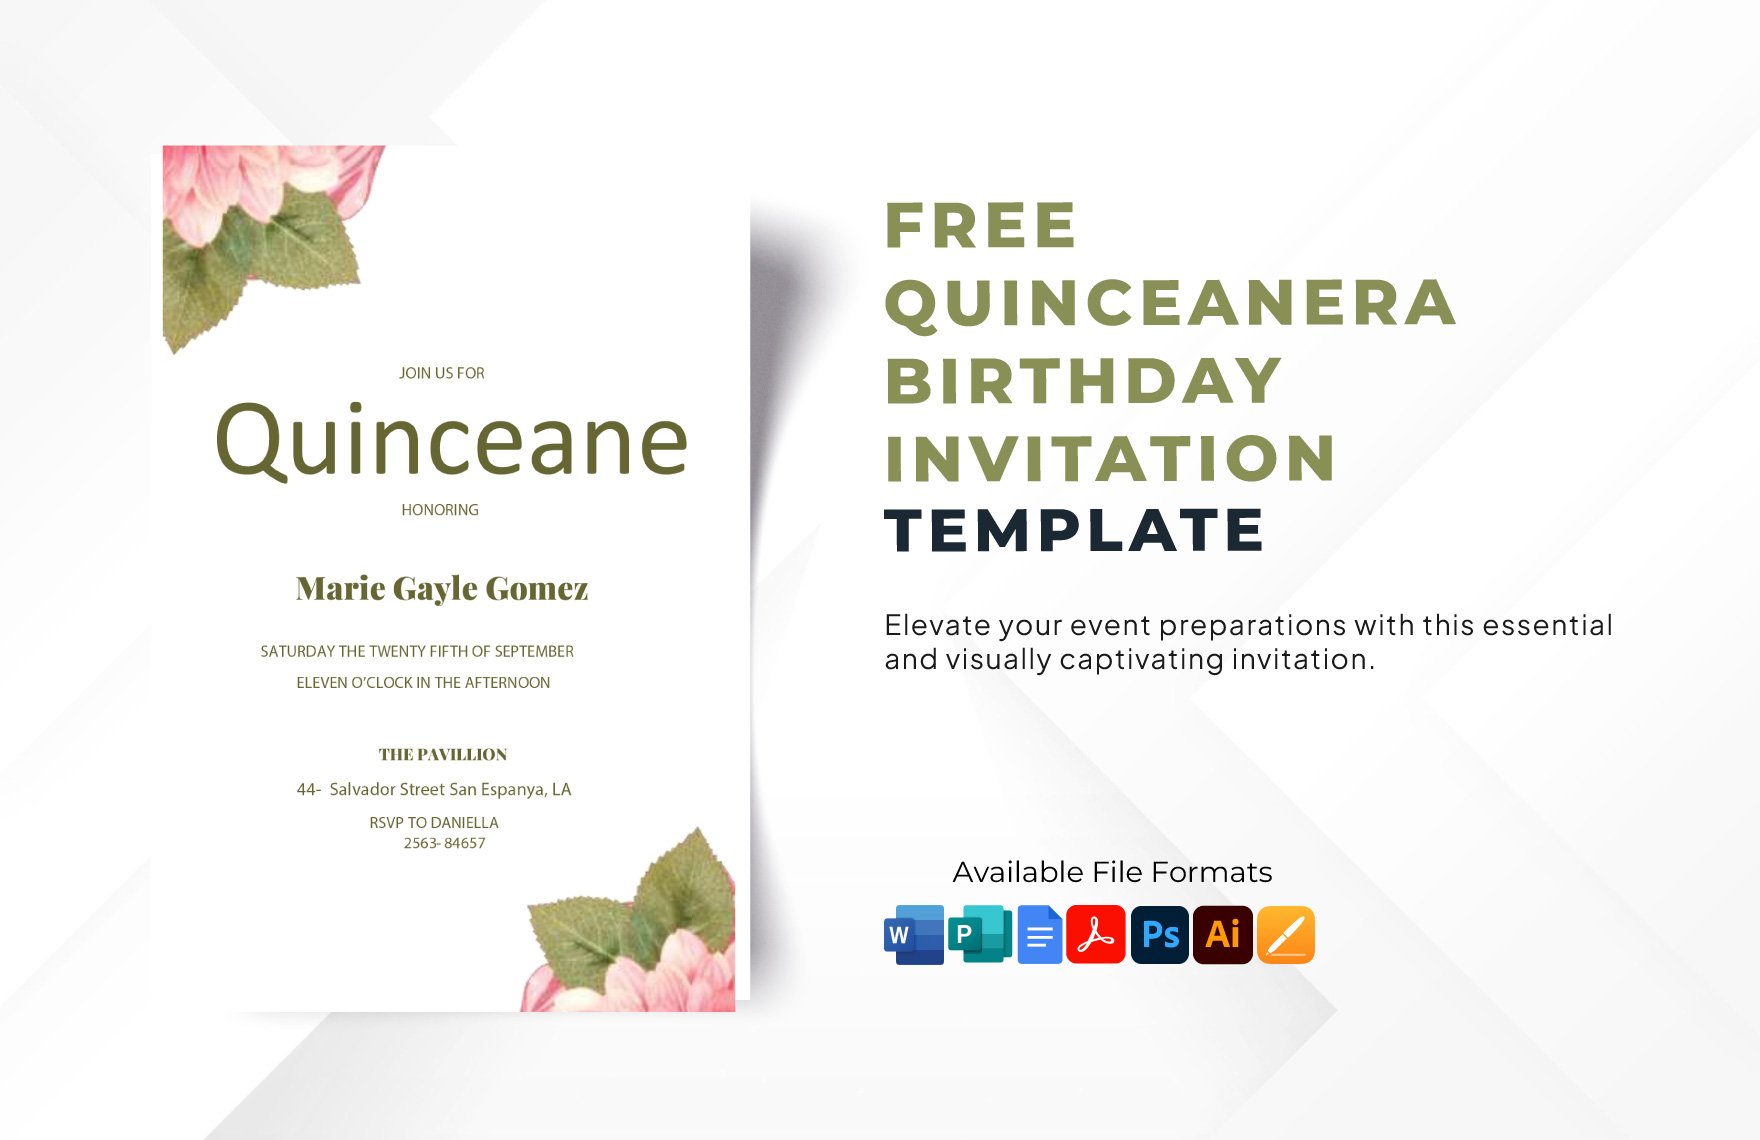 Quinceanera Birthday Invitation Template